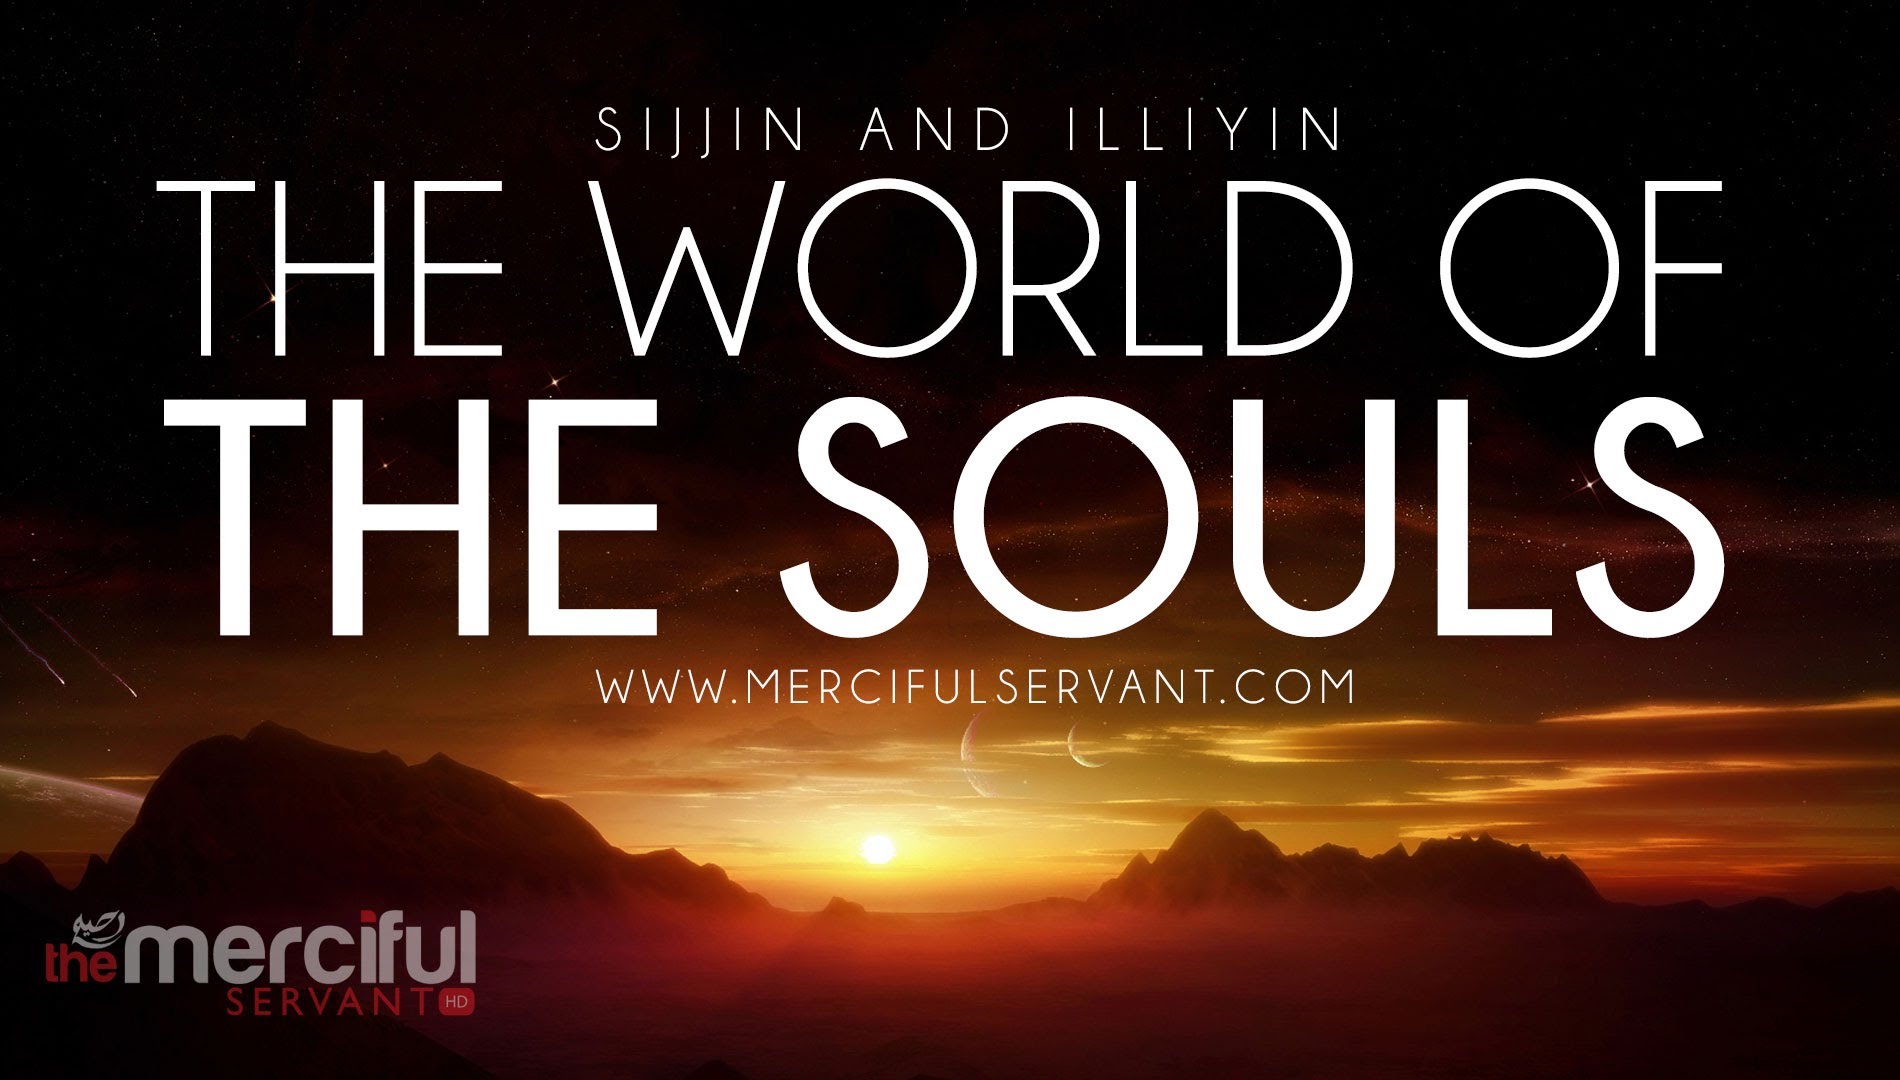 The World Of The Souls - Sijjin and Illiyin